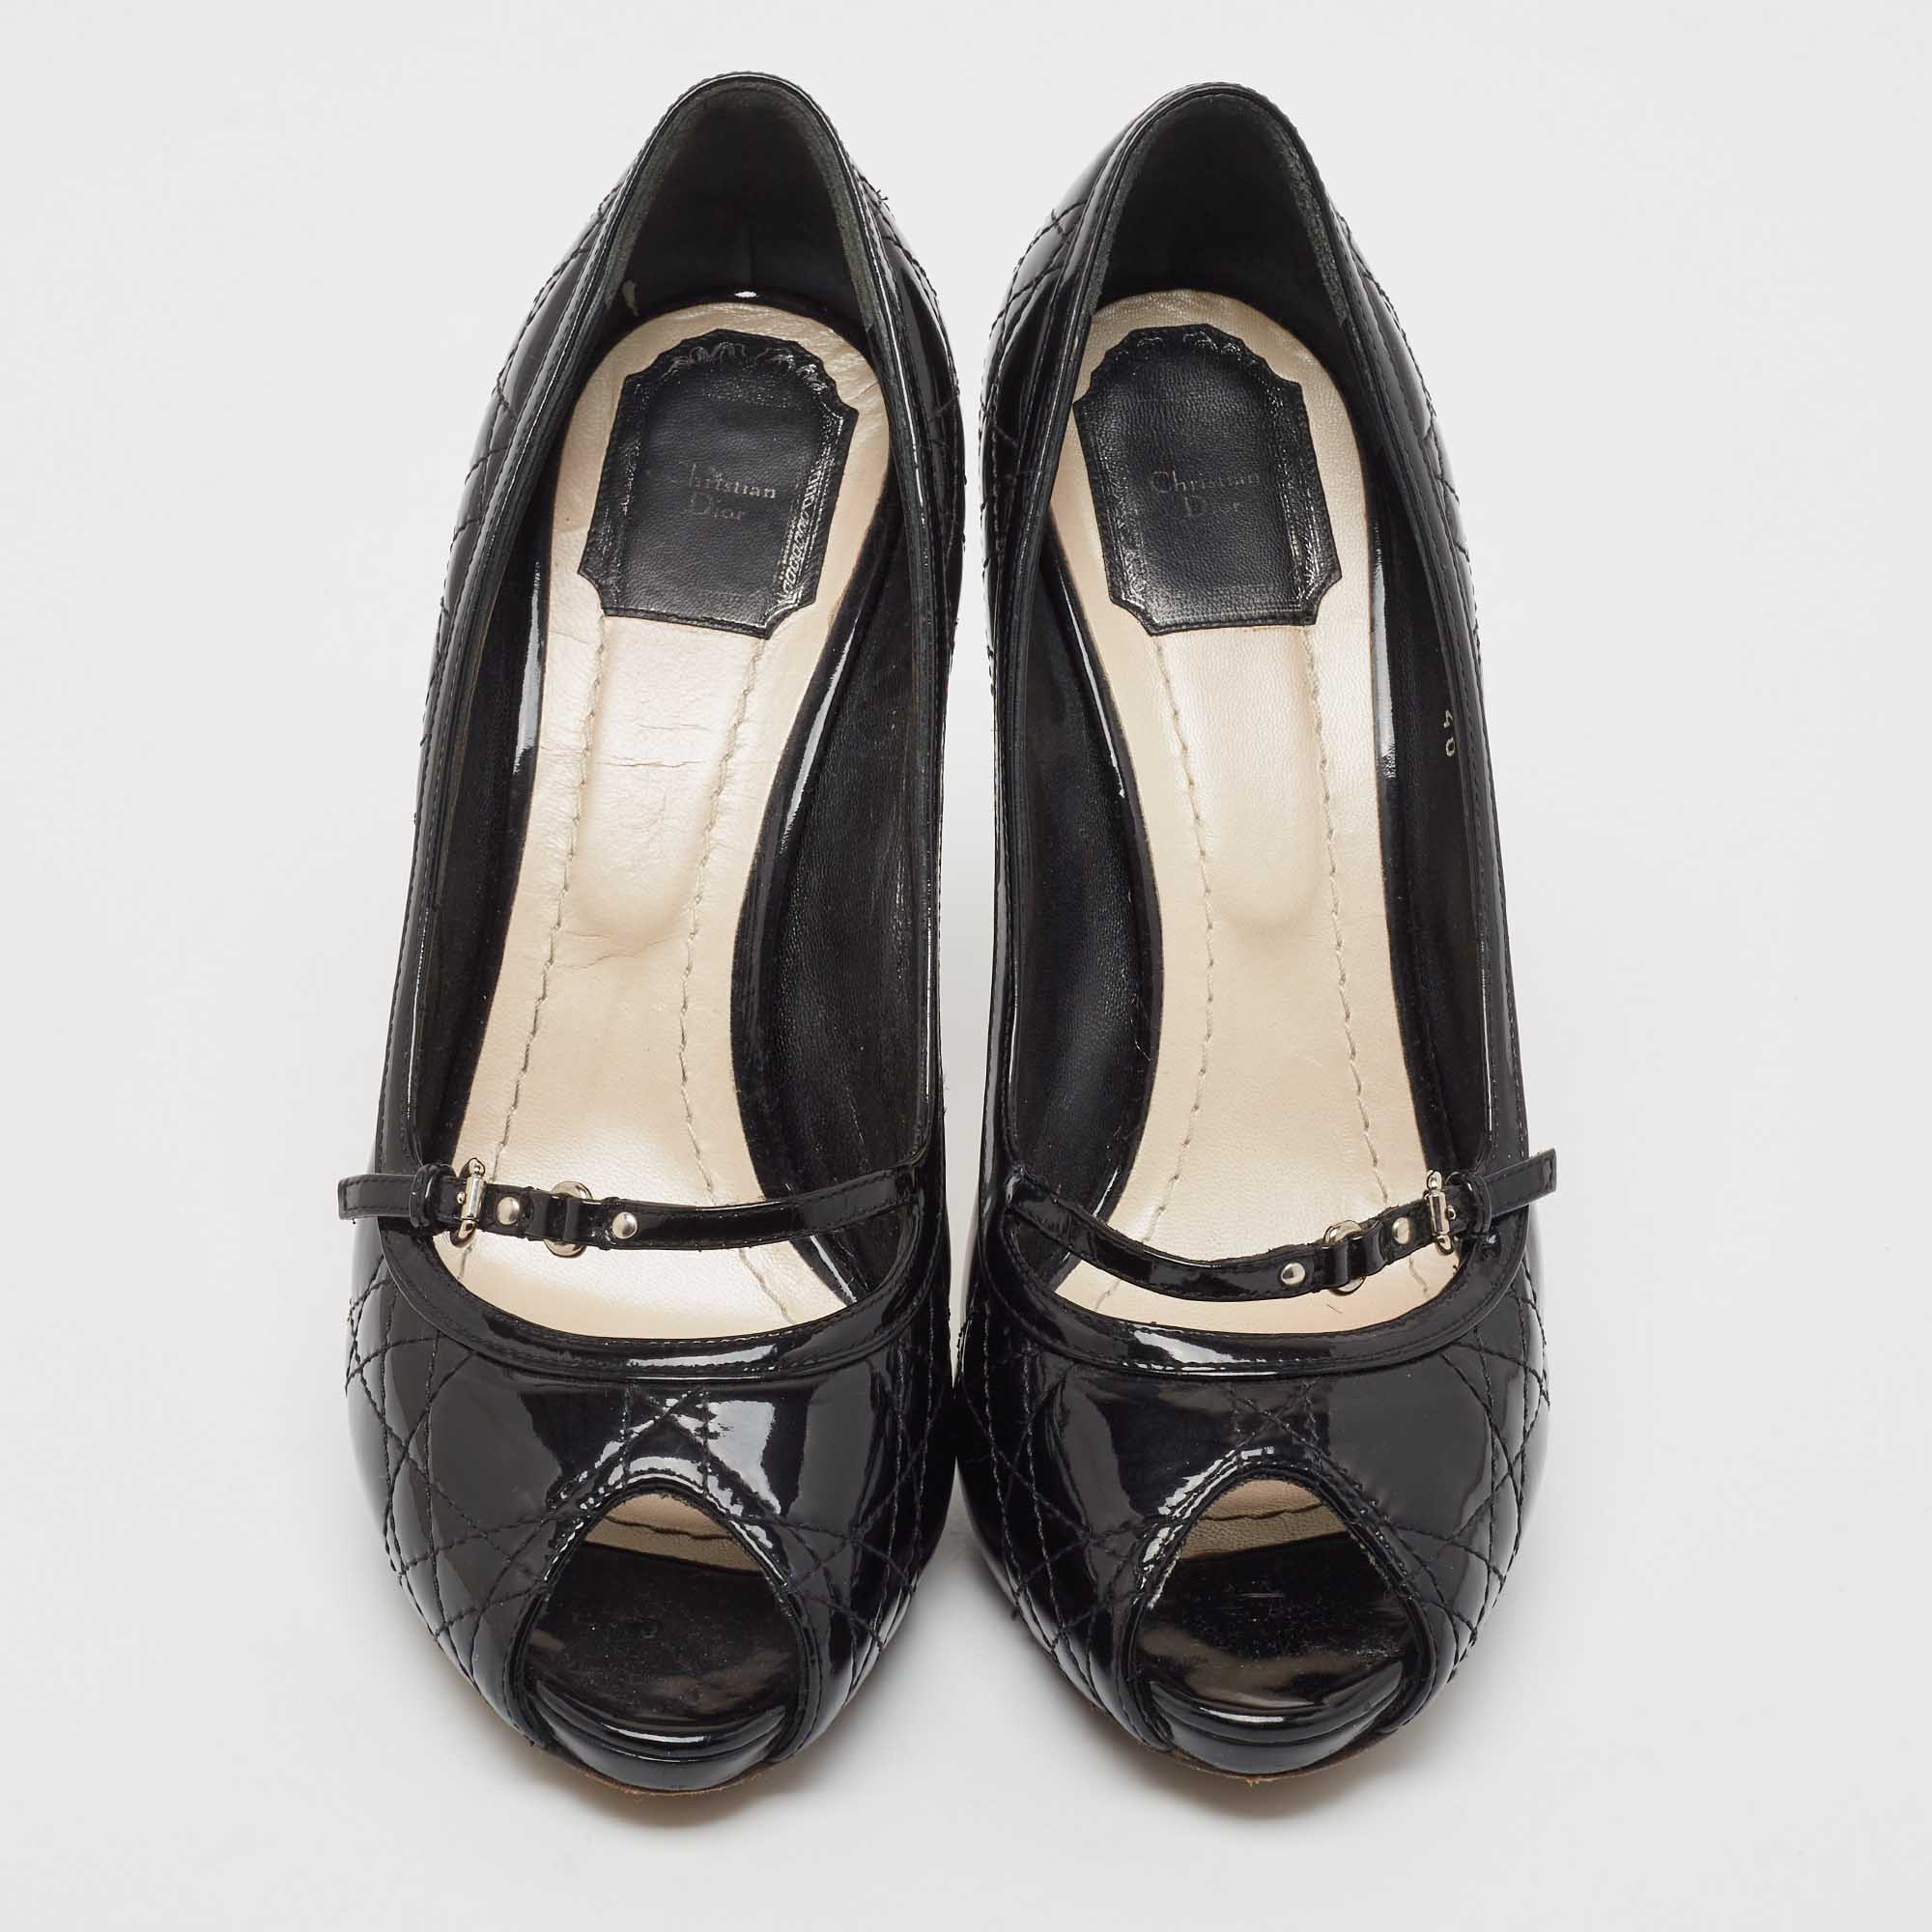 Dior Black Cannage Patent Leather Peep Toe Platform Pumps Size 40